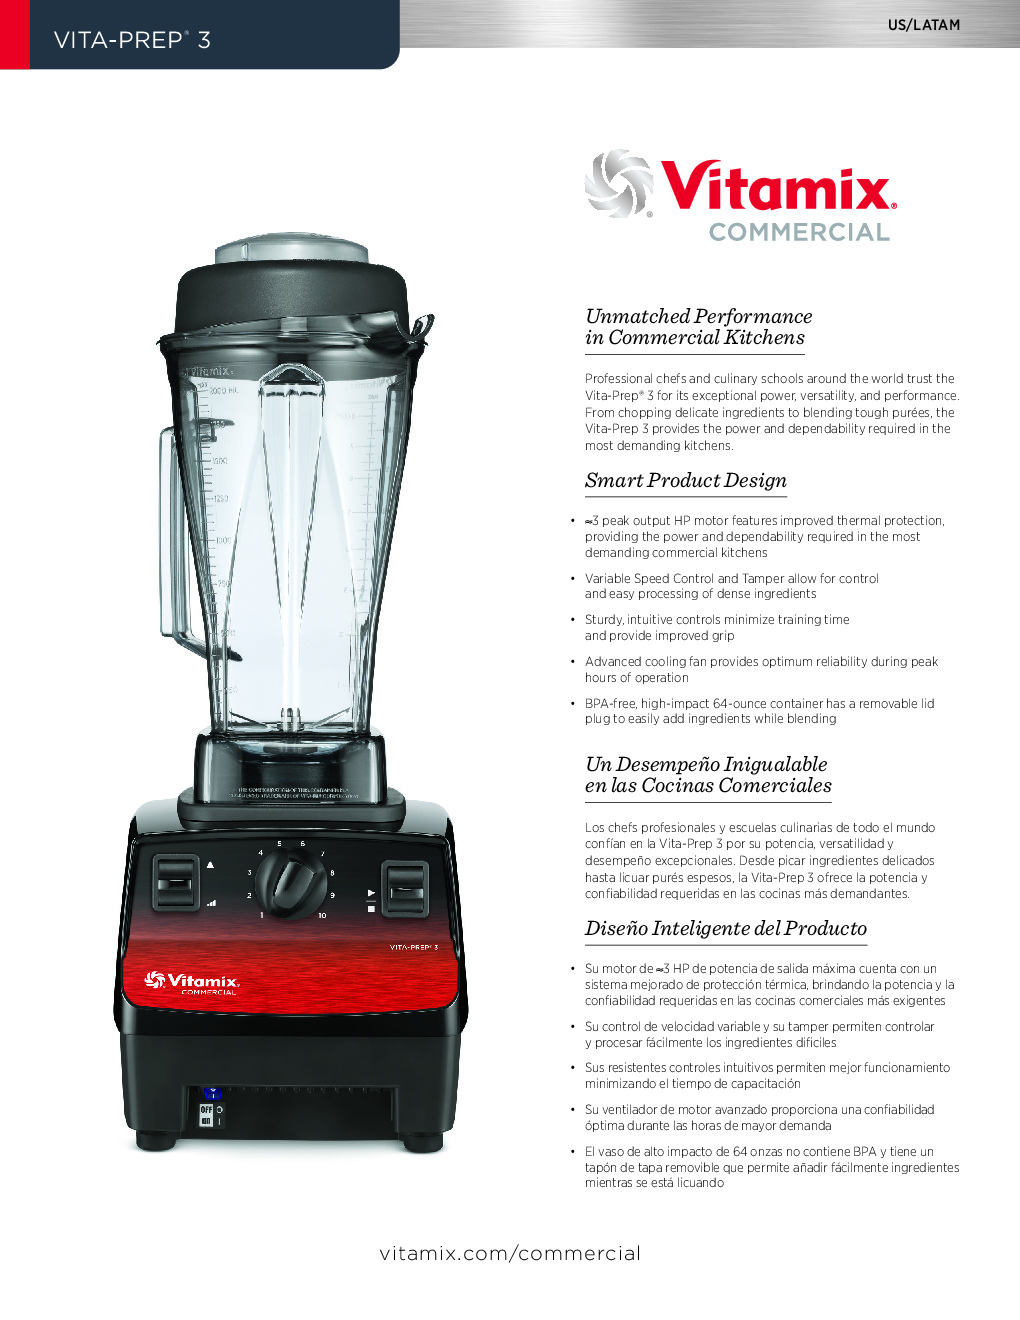 Vitamix 62826 Vita-Prep 3 64 oz. Food Blender